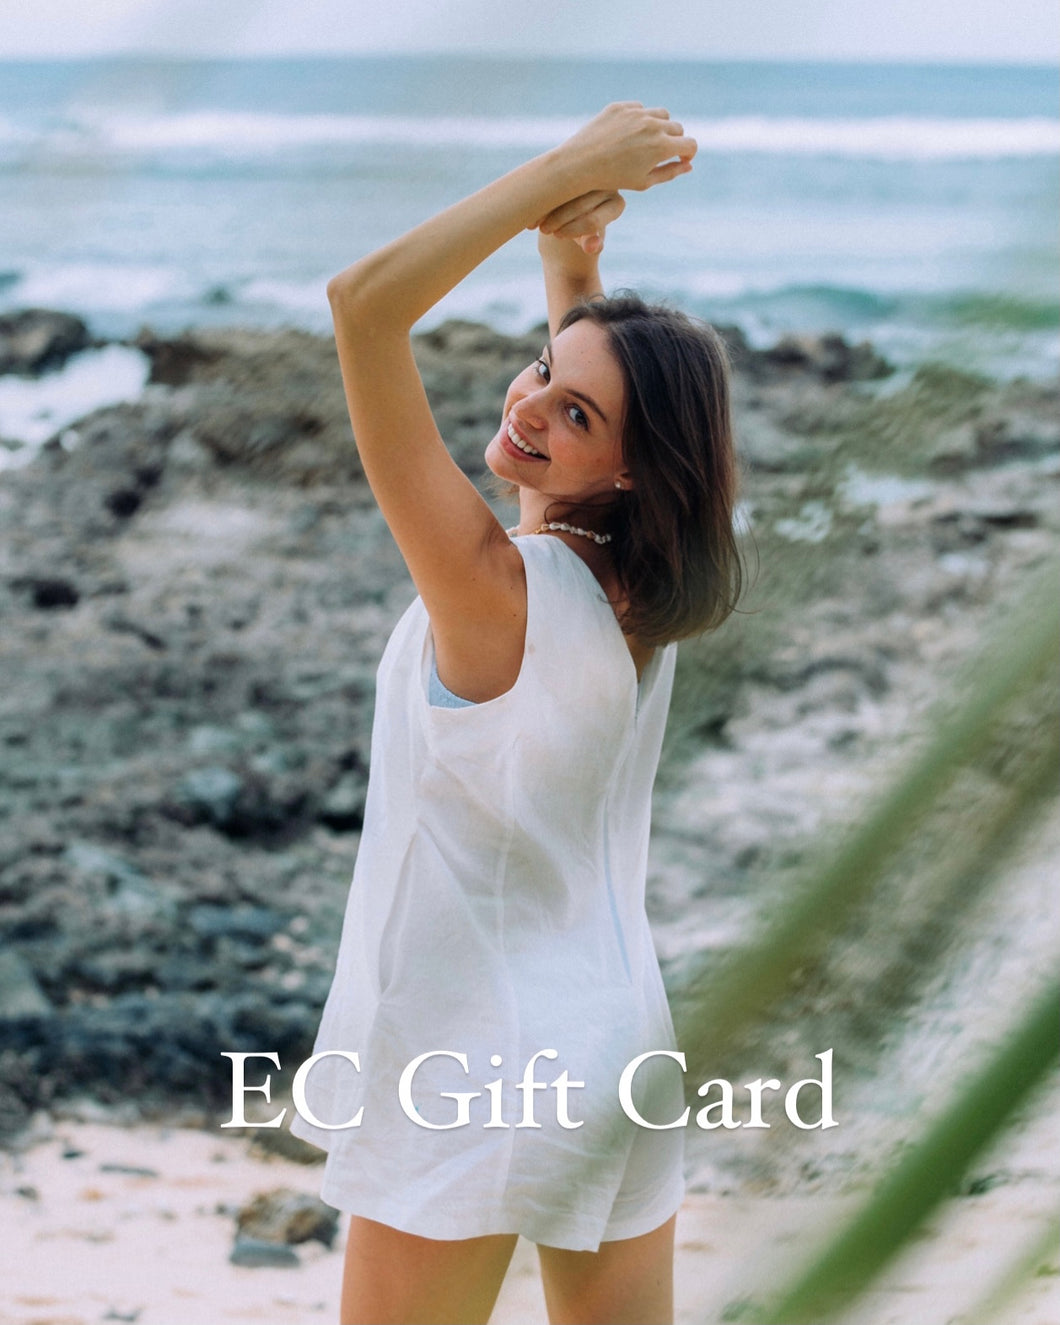 EC Gift Card